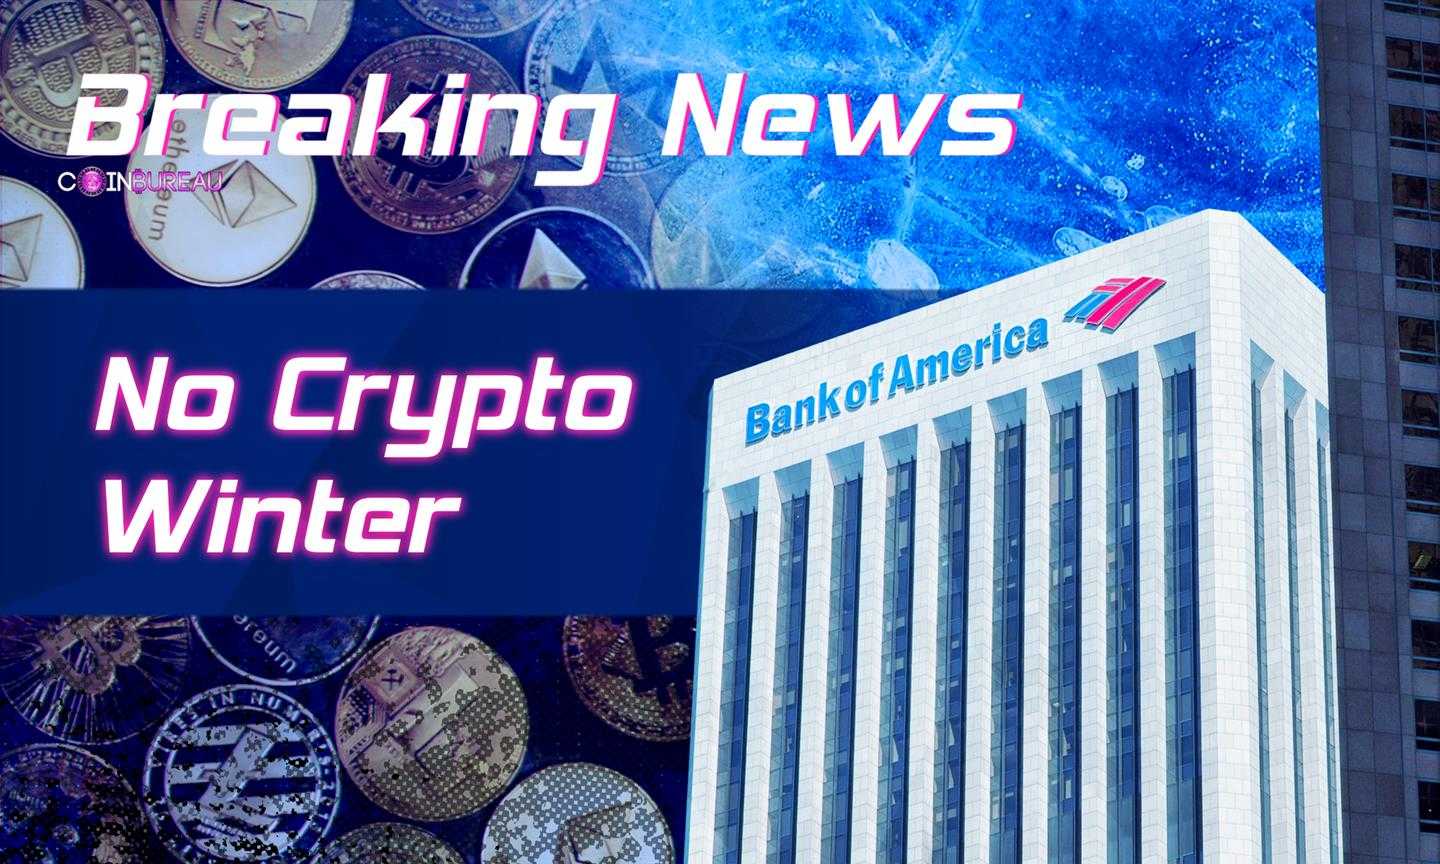 Bank of America Says No Crypto Winter